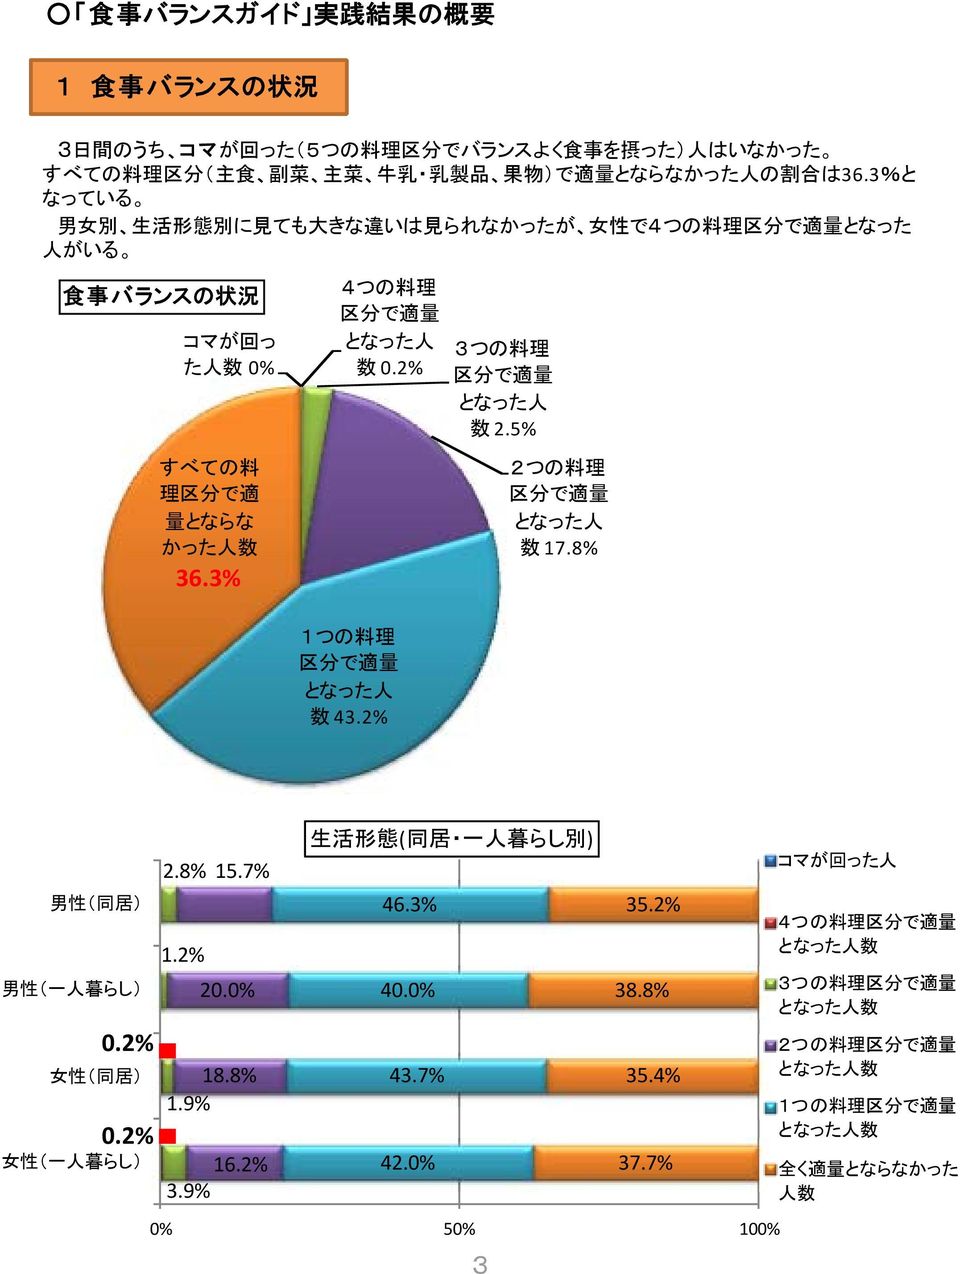 2% 1つの 料 理 区 分 で 適 量 となった 人 数 43.2% 3つの 料 理 区 分 で 適 量 となった 人 数 2.5% 2つの 料 理 区 分 で 適 量 となった 人 数 17.8% 0.2% 0.2% 2.8% 15.7% 1.2% 20.0% 18.8% 1.9% 16.2% 3.9% 生 活 形 態 ( 同 居 一 人 暮 らし 別 ) 46.